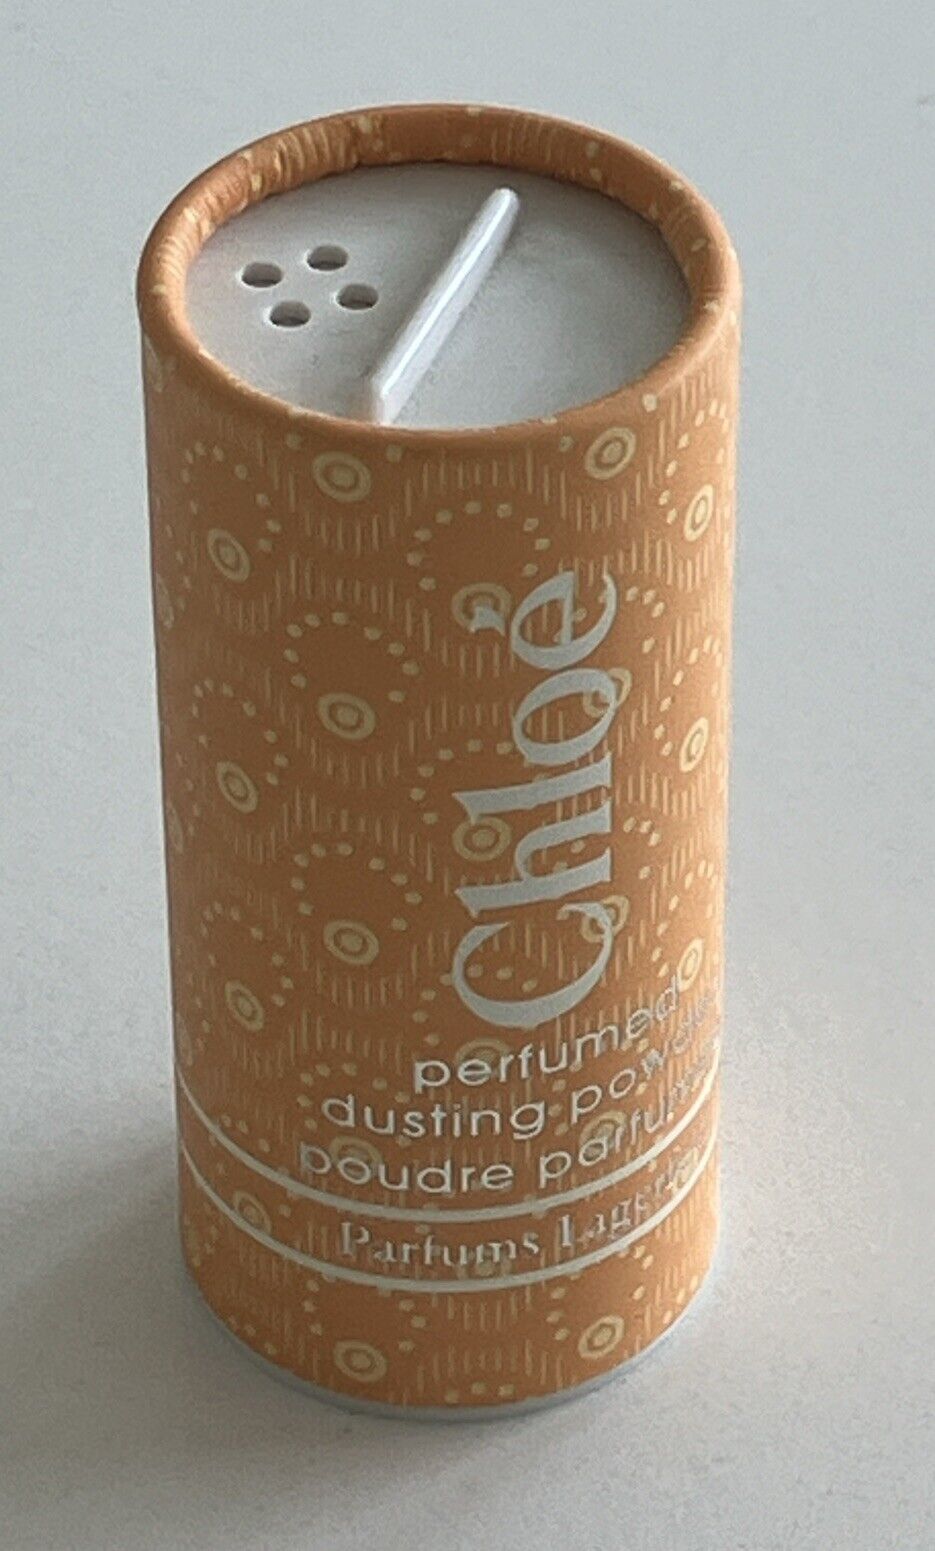 NEW Vintage CHLOE Perfumed Dusting Powder .5 oz 14g